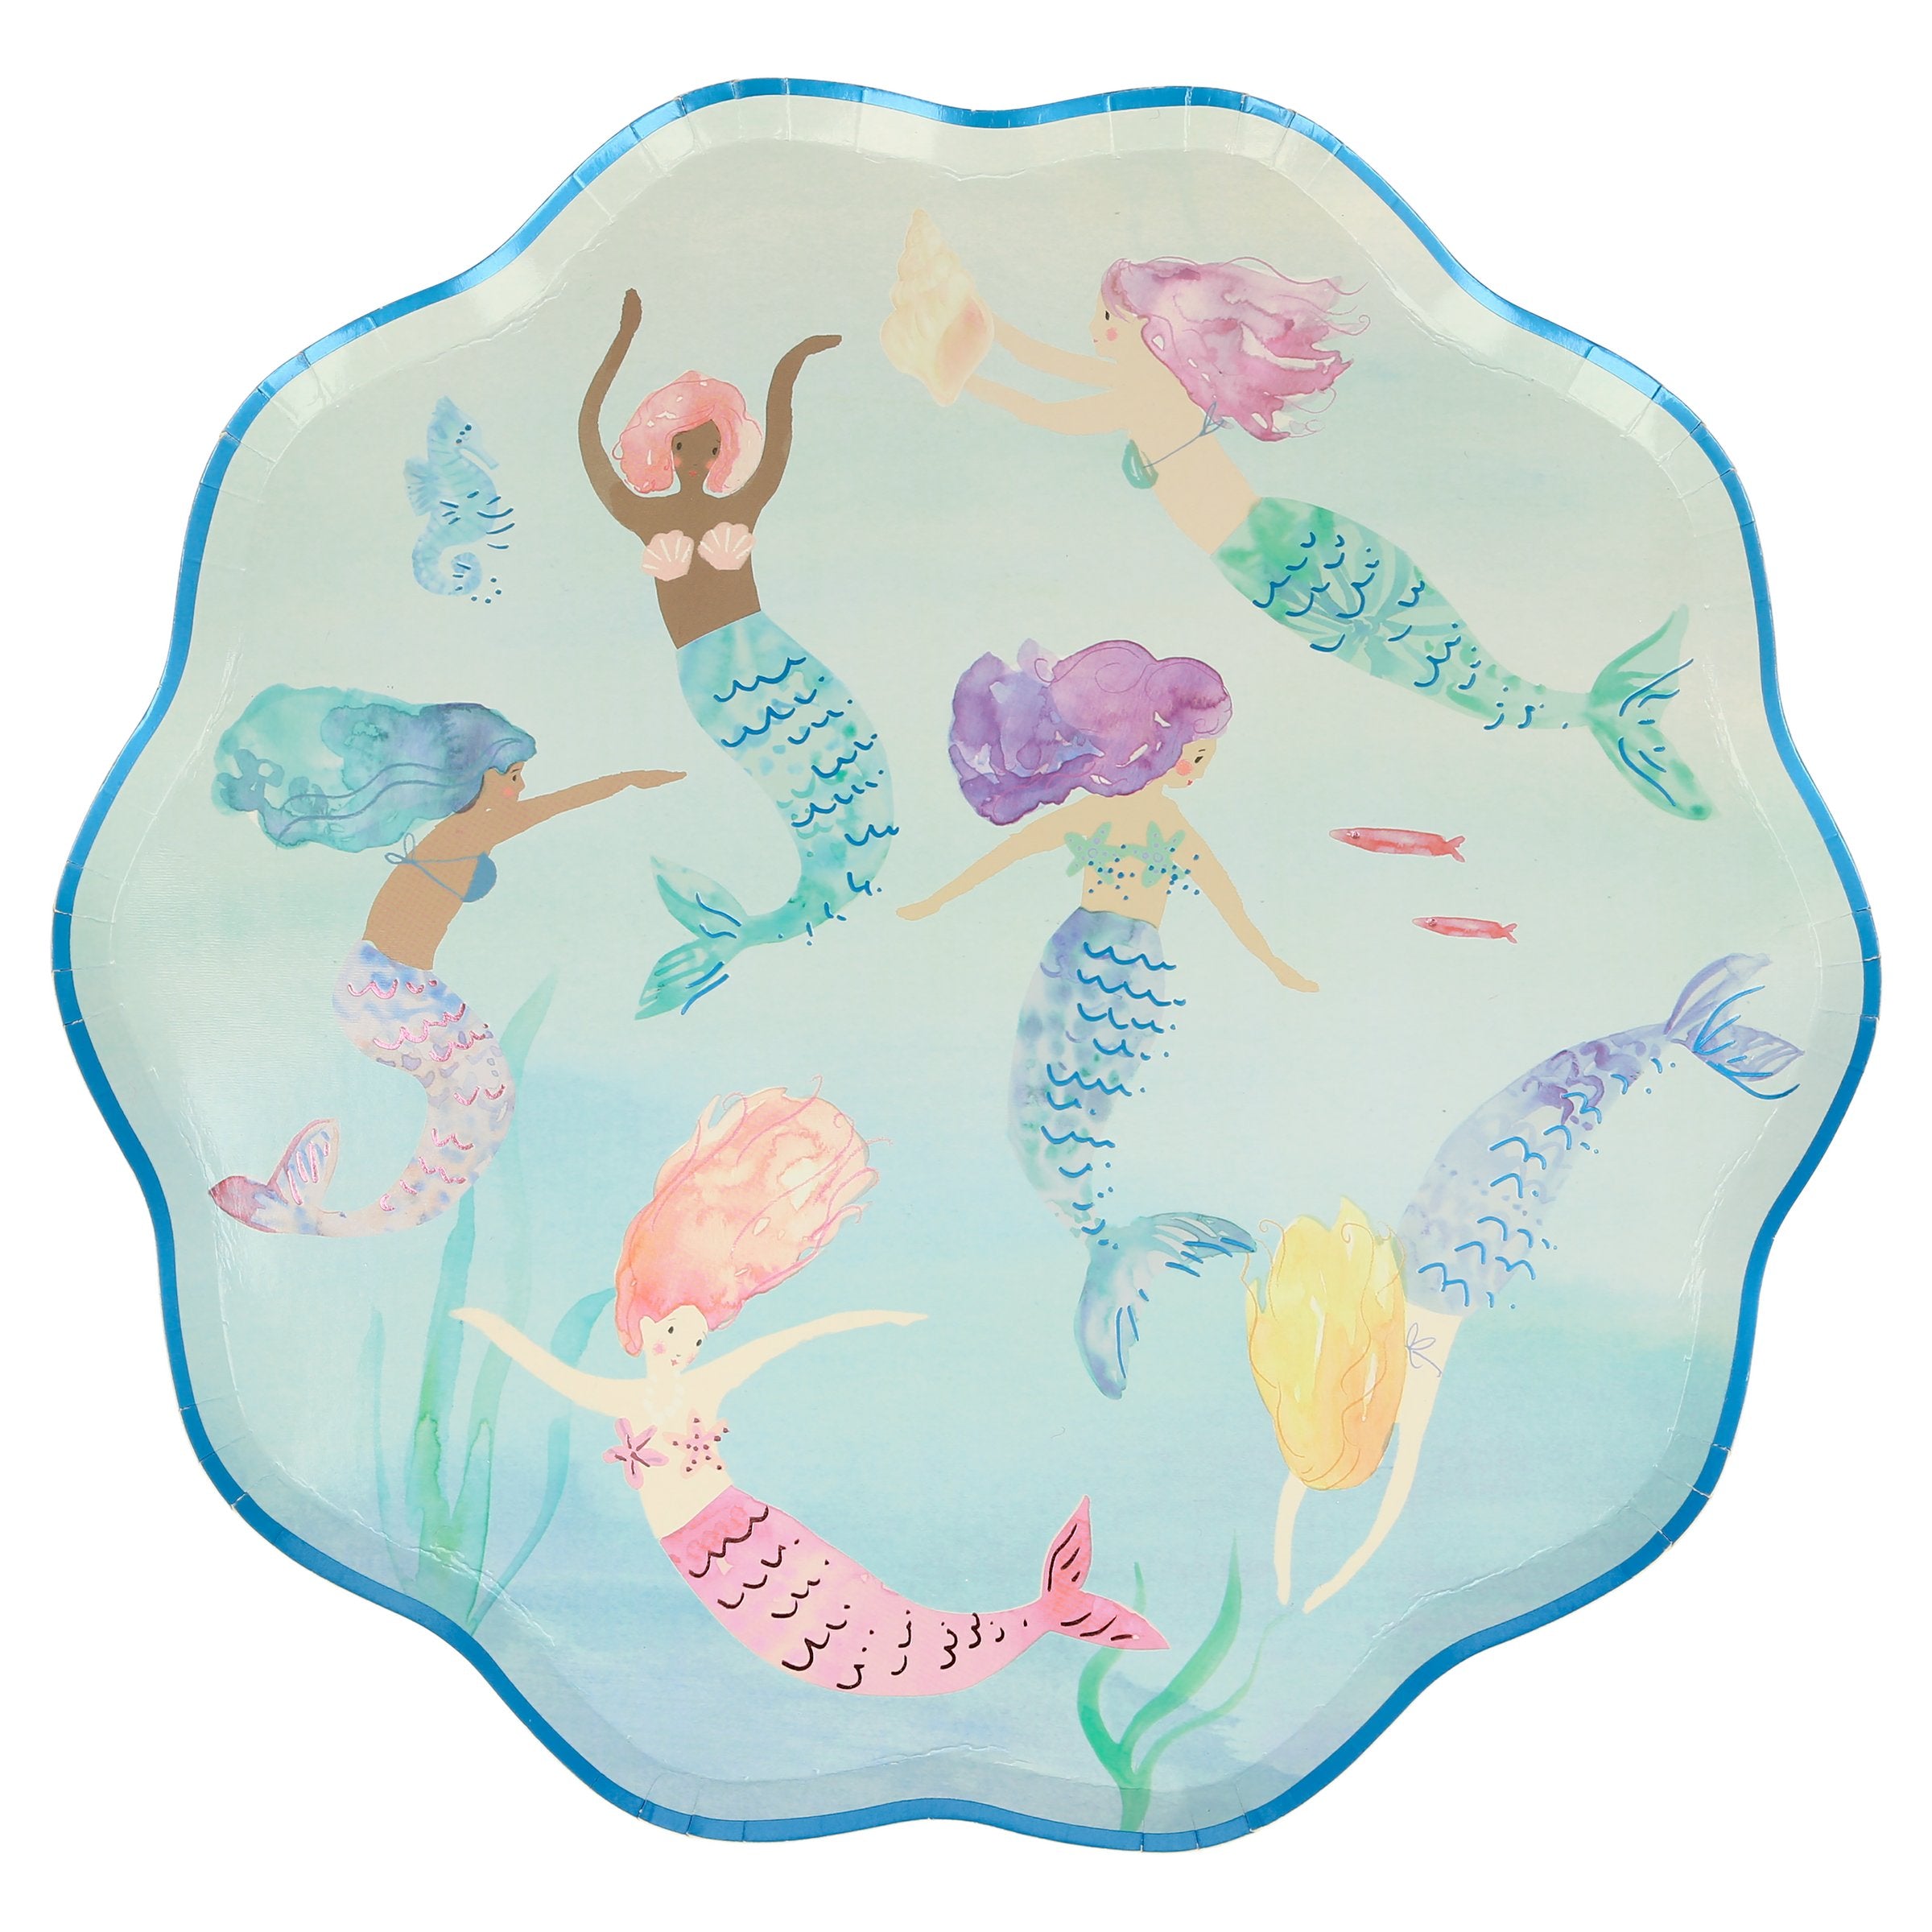 Our mermaid party supplies bundle includes mermaid tableware and a mermaid garland.